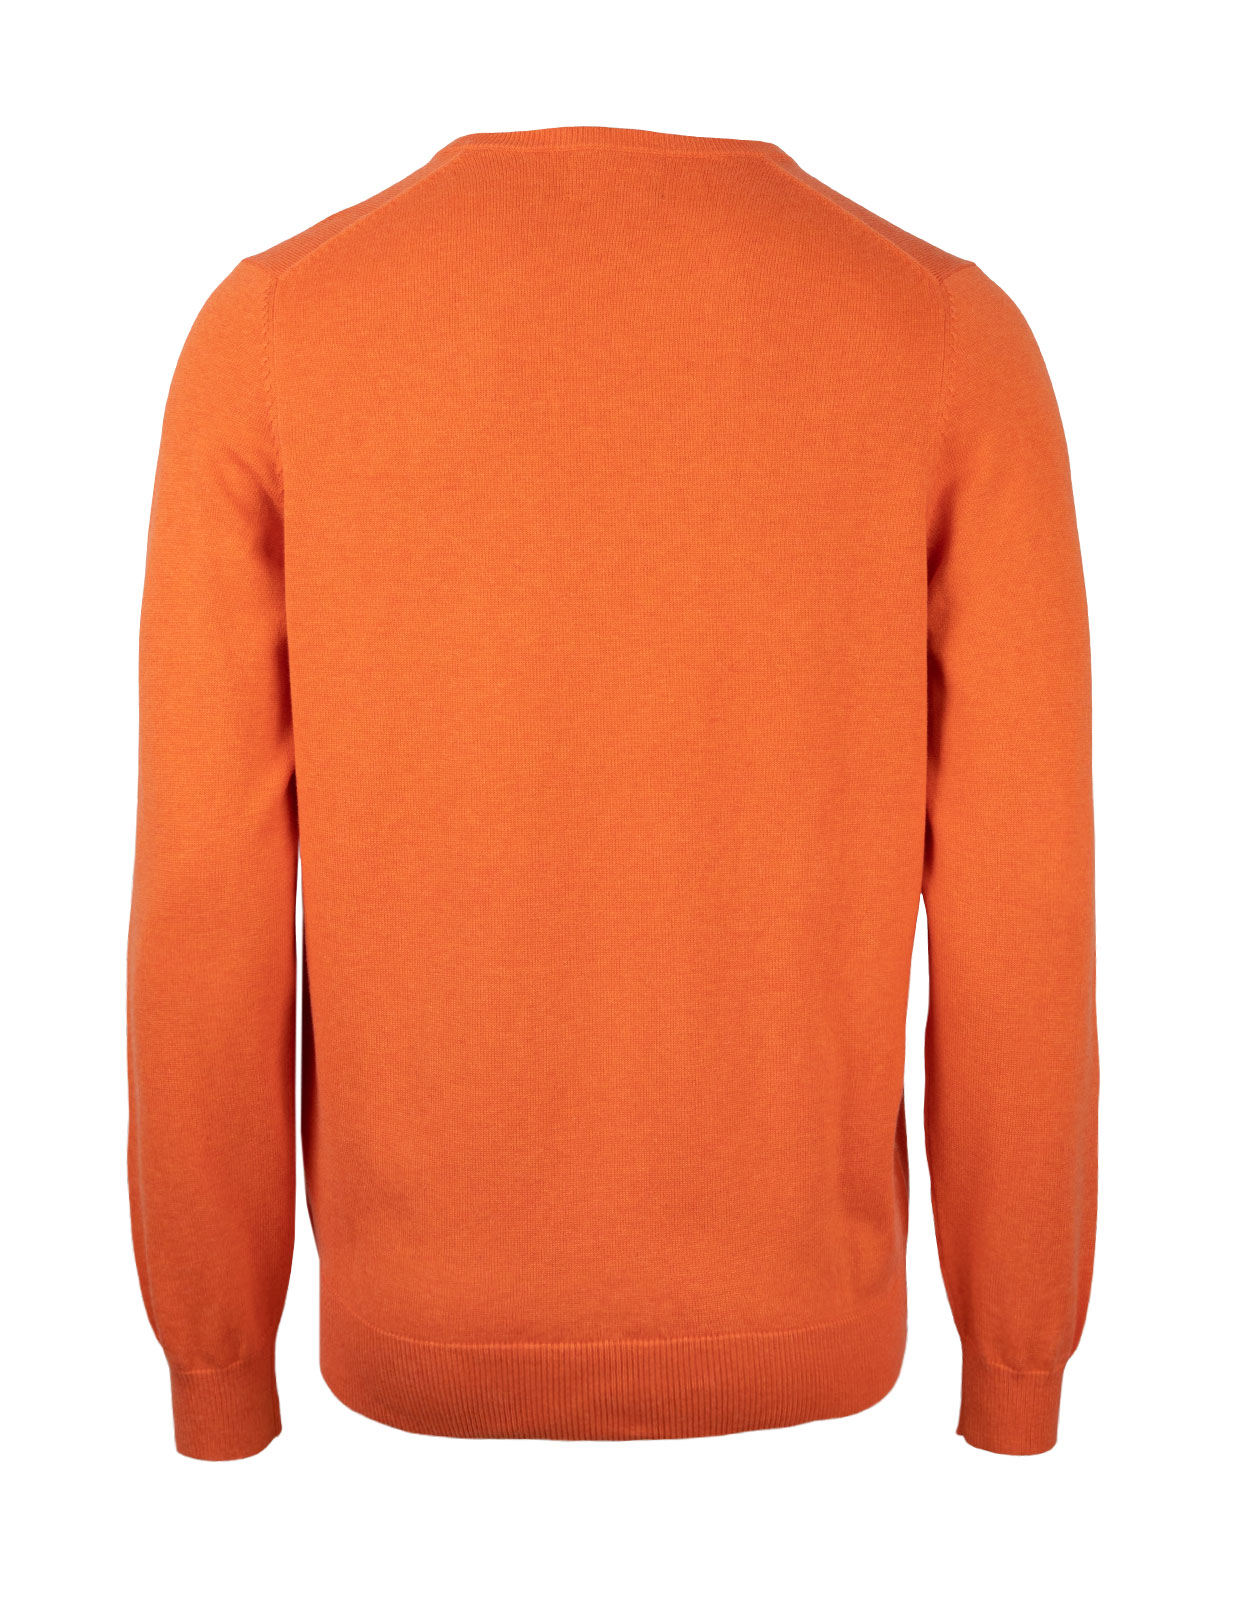 Rothwell Vee Neck Cotton Cashmere Blazing Orange